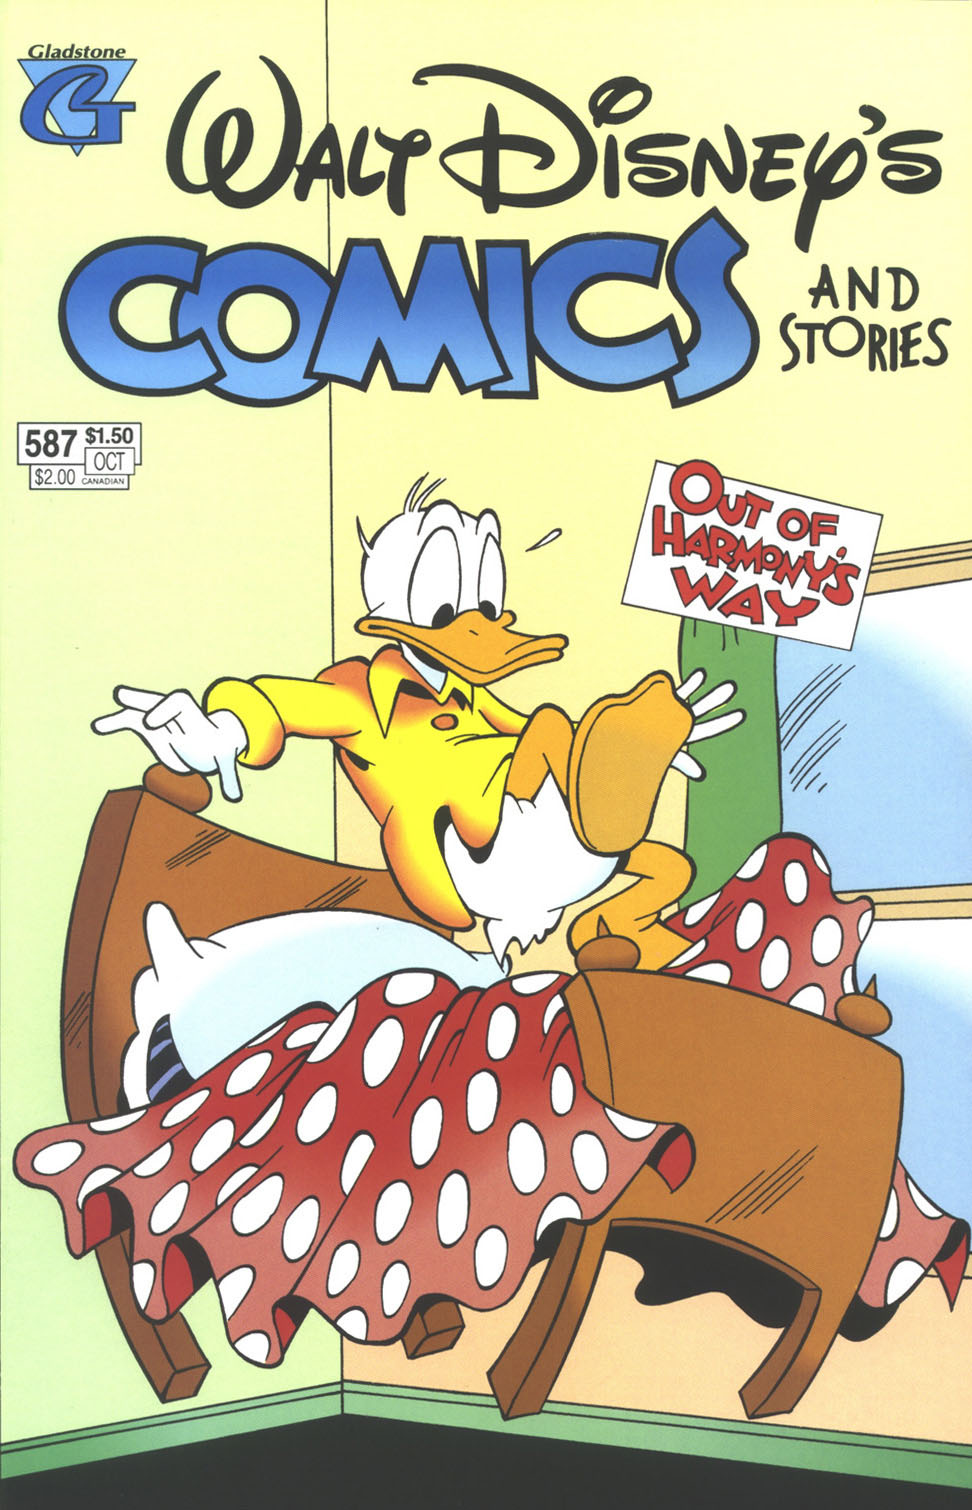 Walt Disneys Comics and Stories 587 Page 1